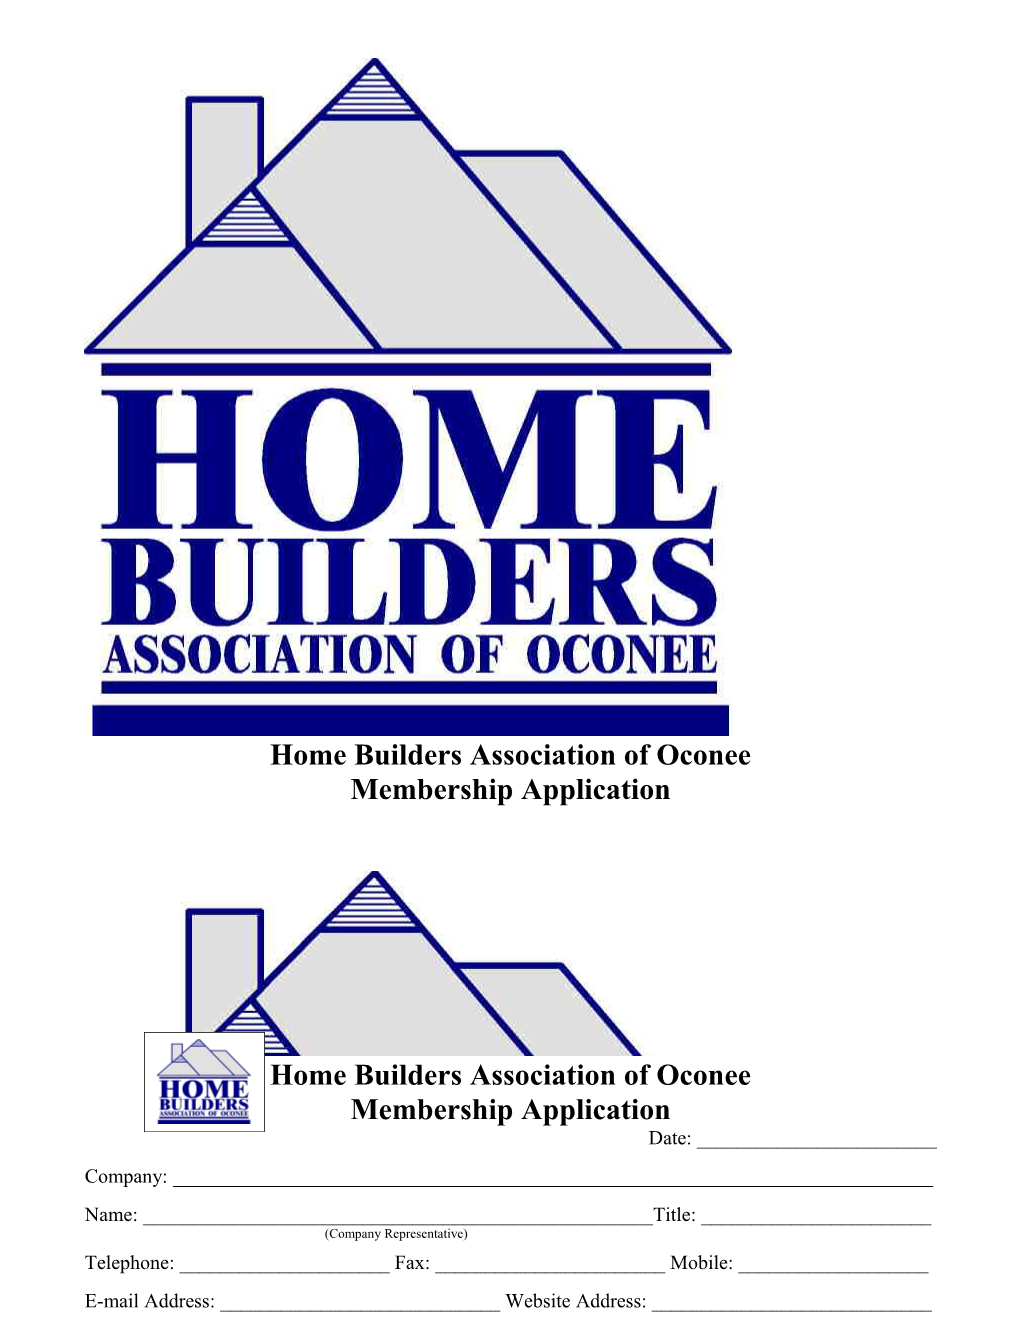 Home Builders Association of Oconee